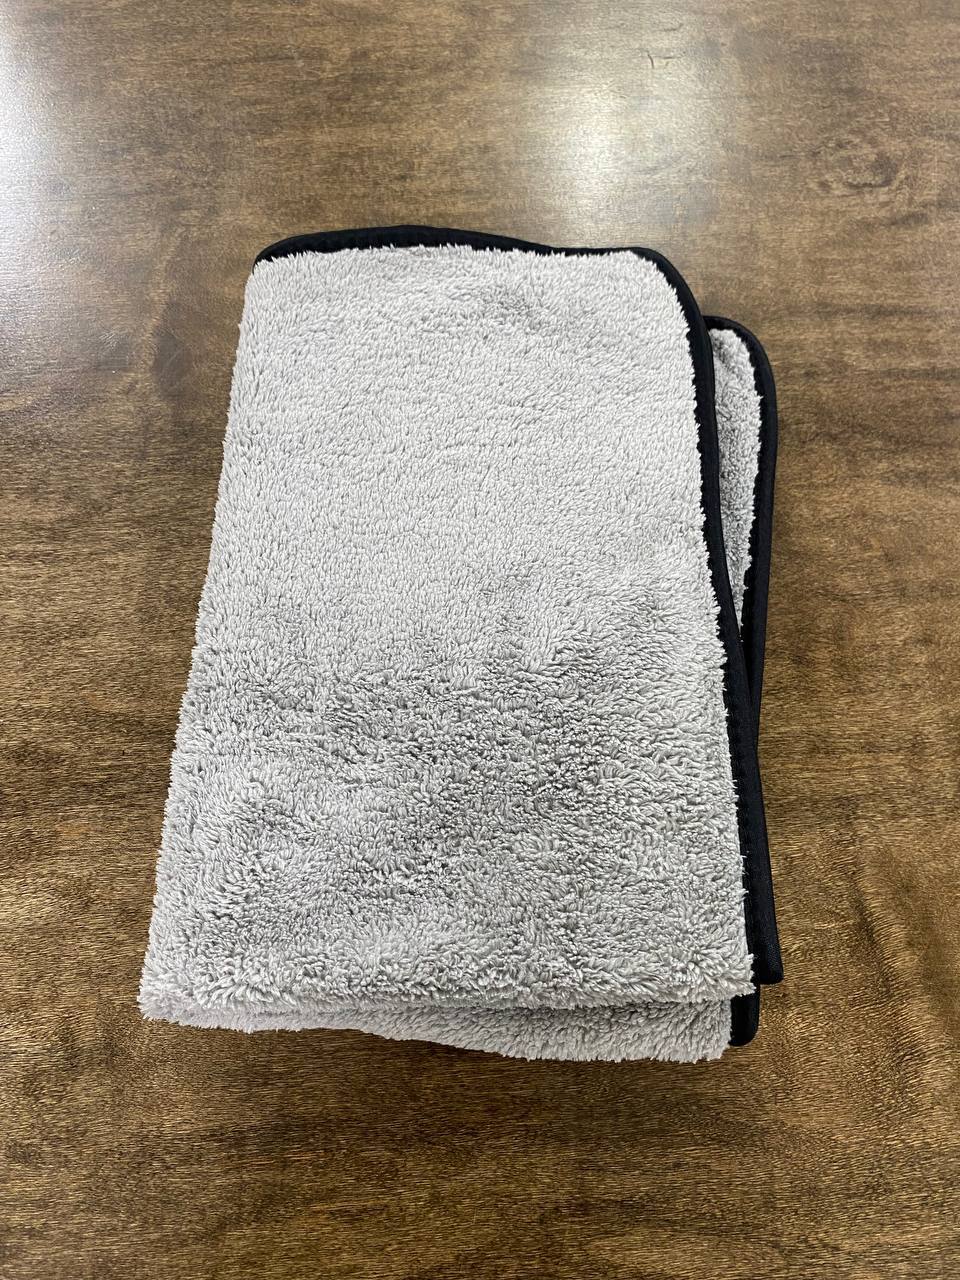 Drying Towel